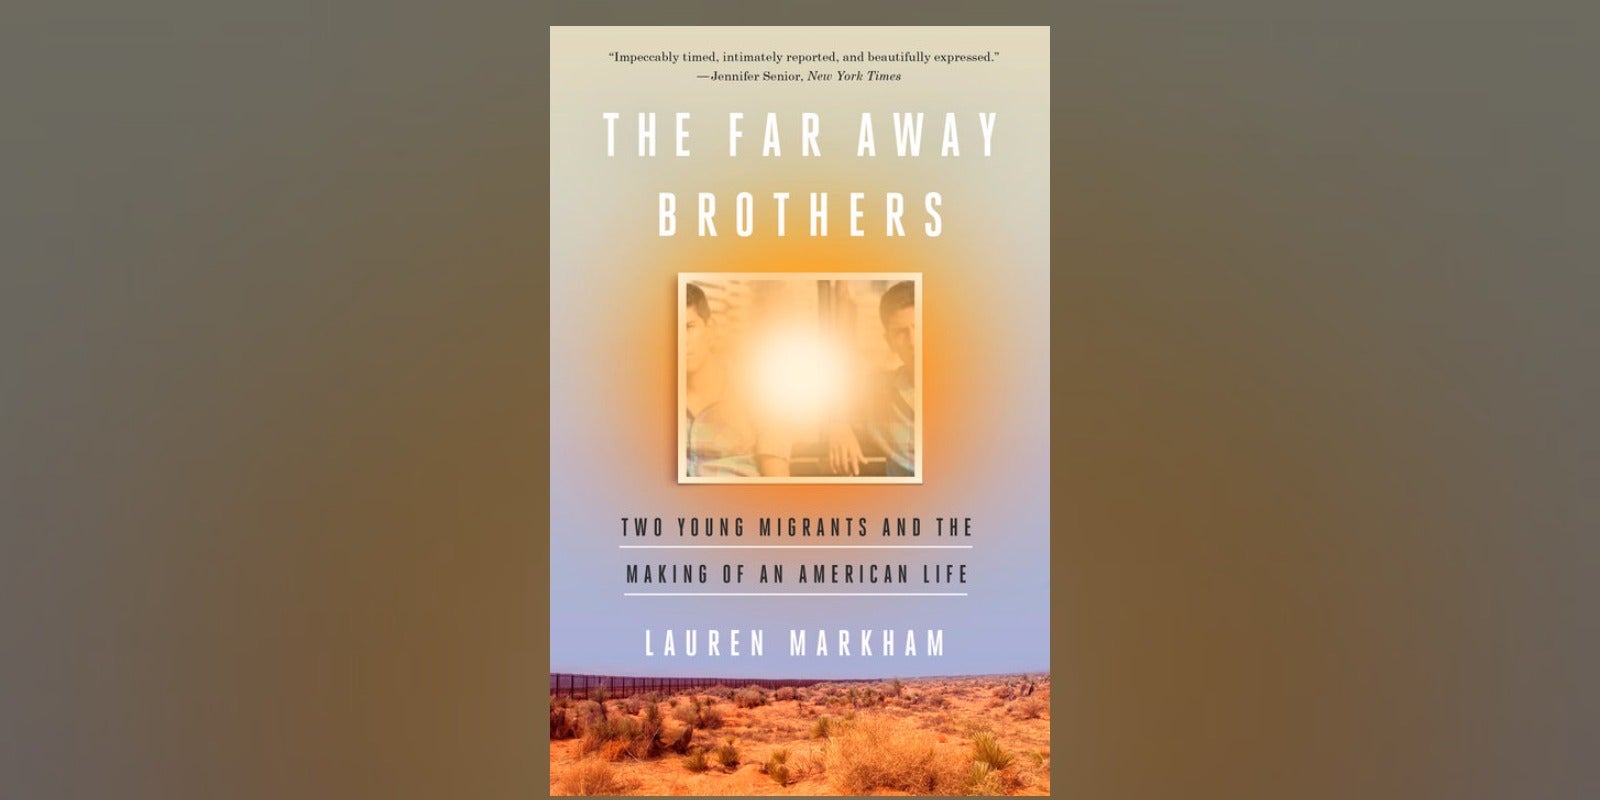 Author Lauren Markham on The Human Face of Migration